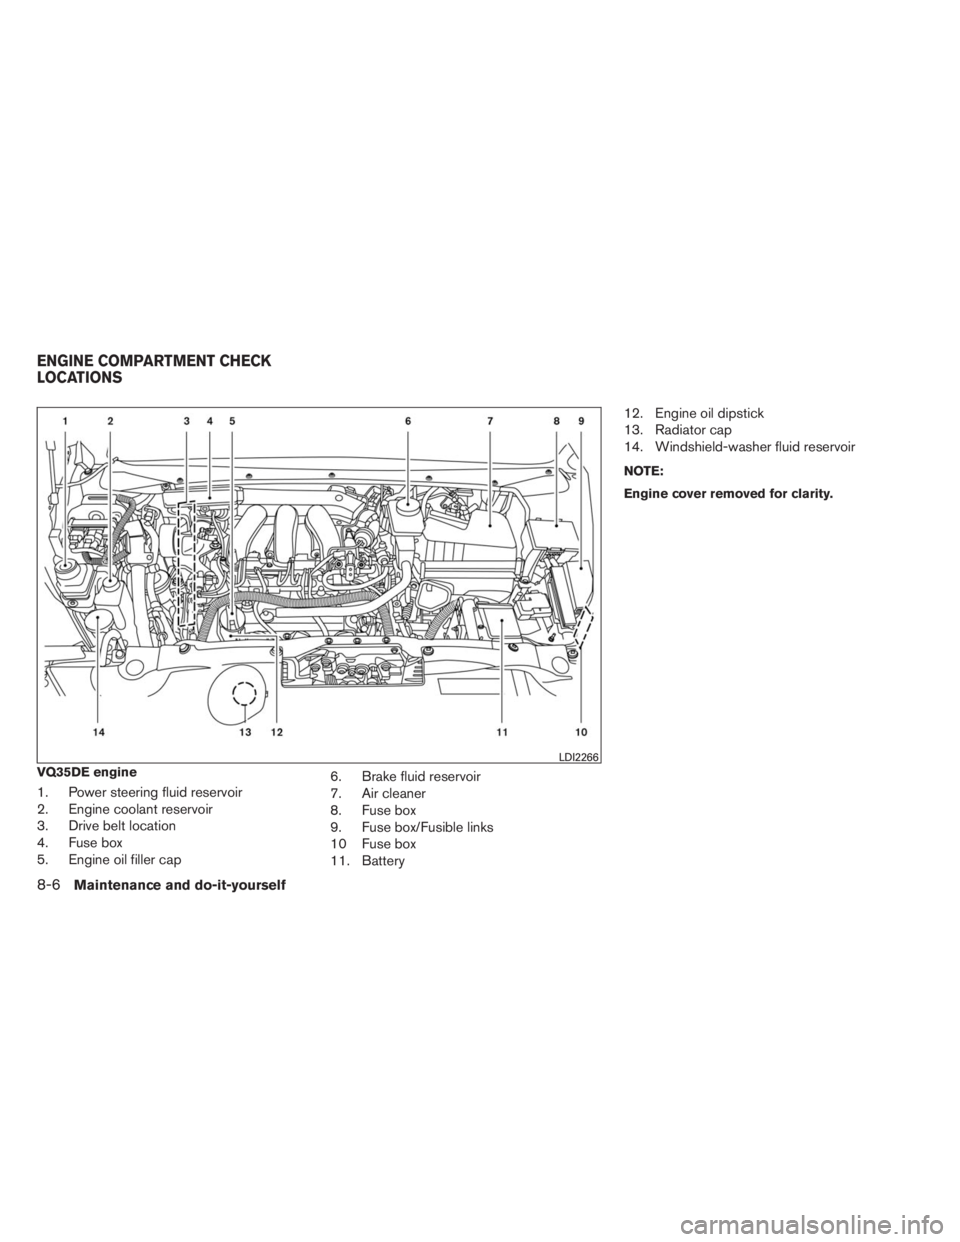 INFINITI QX60 2014  Owners Manual VQ35DE engine
1. Power steering fluid reservoir
2. Engine coolant reservoir
3. Drive belt location
4. Fuse box
5. Engine oil filler cap6. Brake fluid reservoir
7. Air cleaner
8. Fuse box
9. Fuse box/F